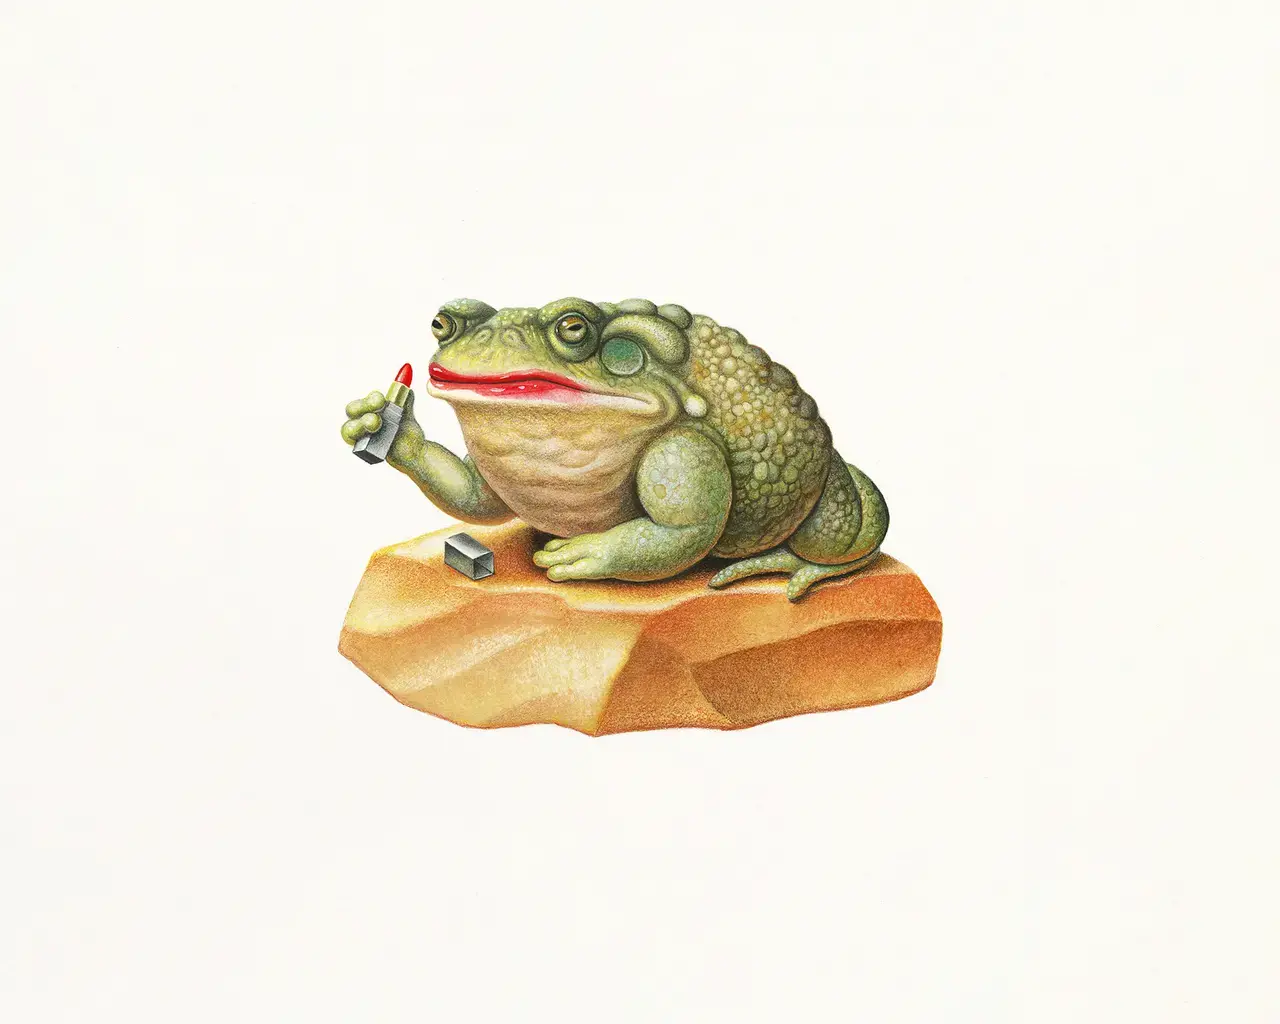 "Sonoran Desert Toad" illustration by Armando Veve.